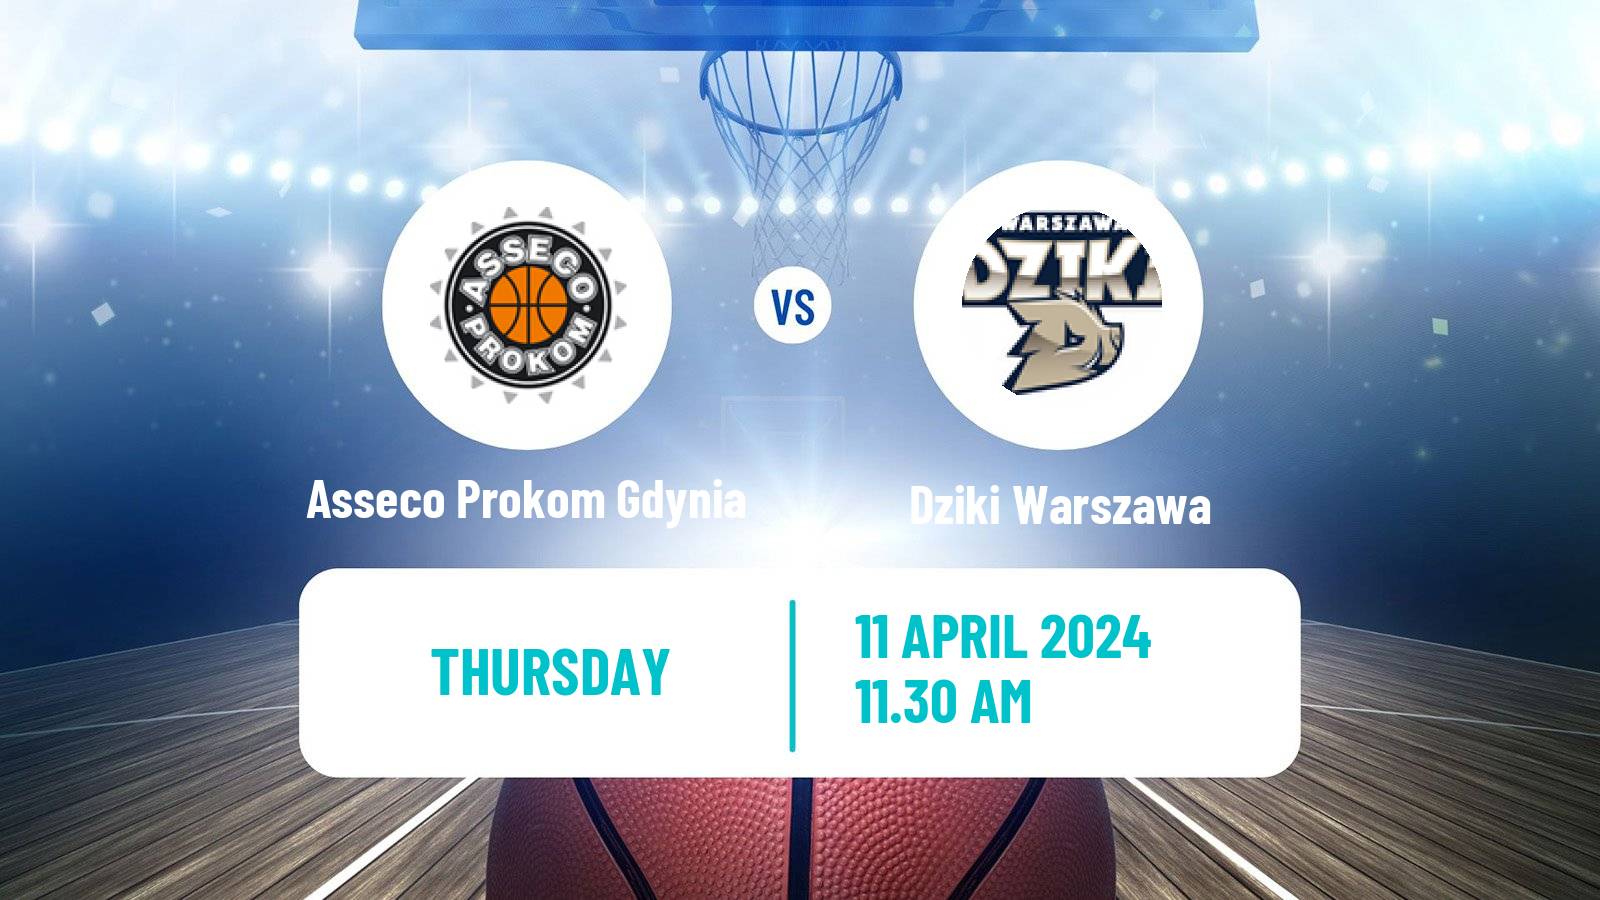 Basketball Polish Basket Liga Asseco Prokom Gdynia - Dziki Warszawa